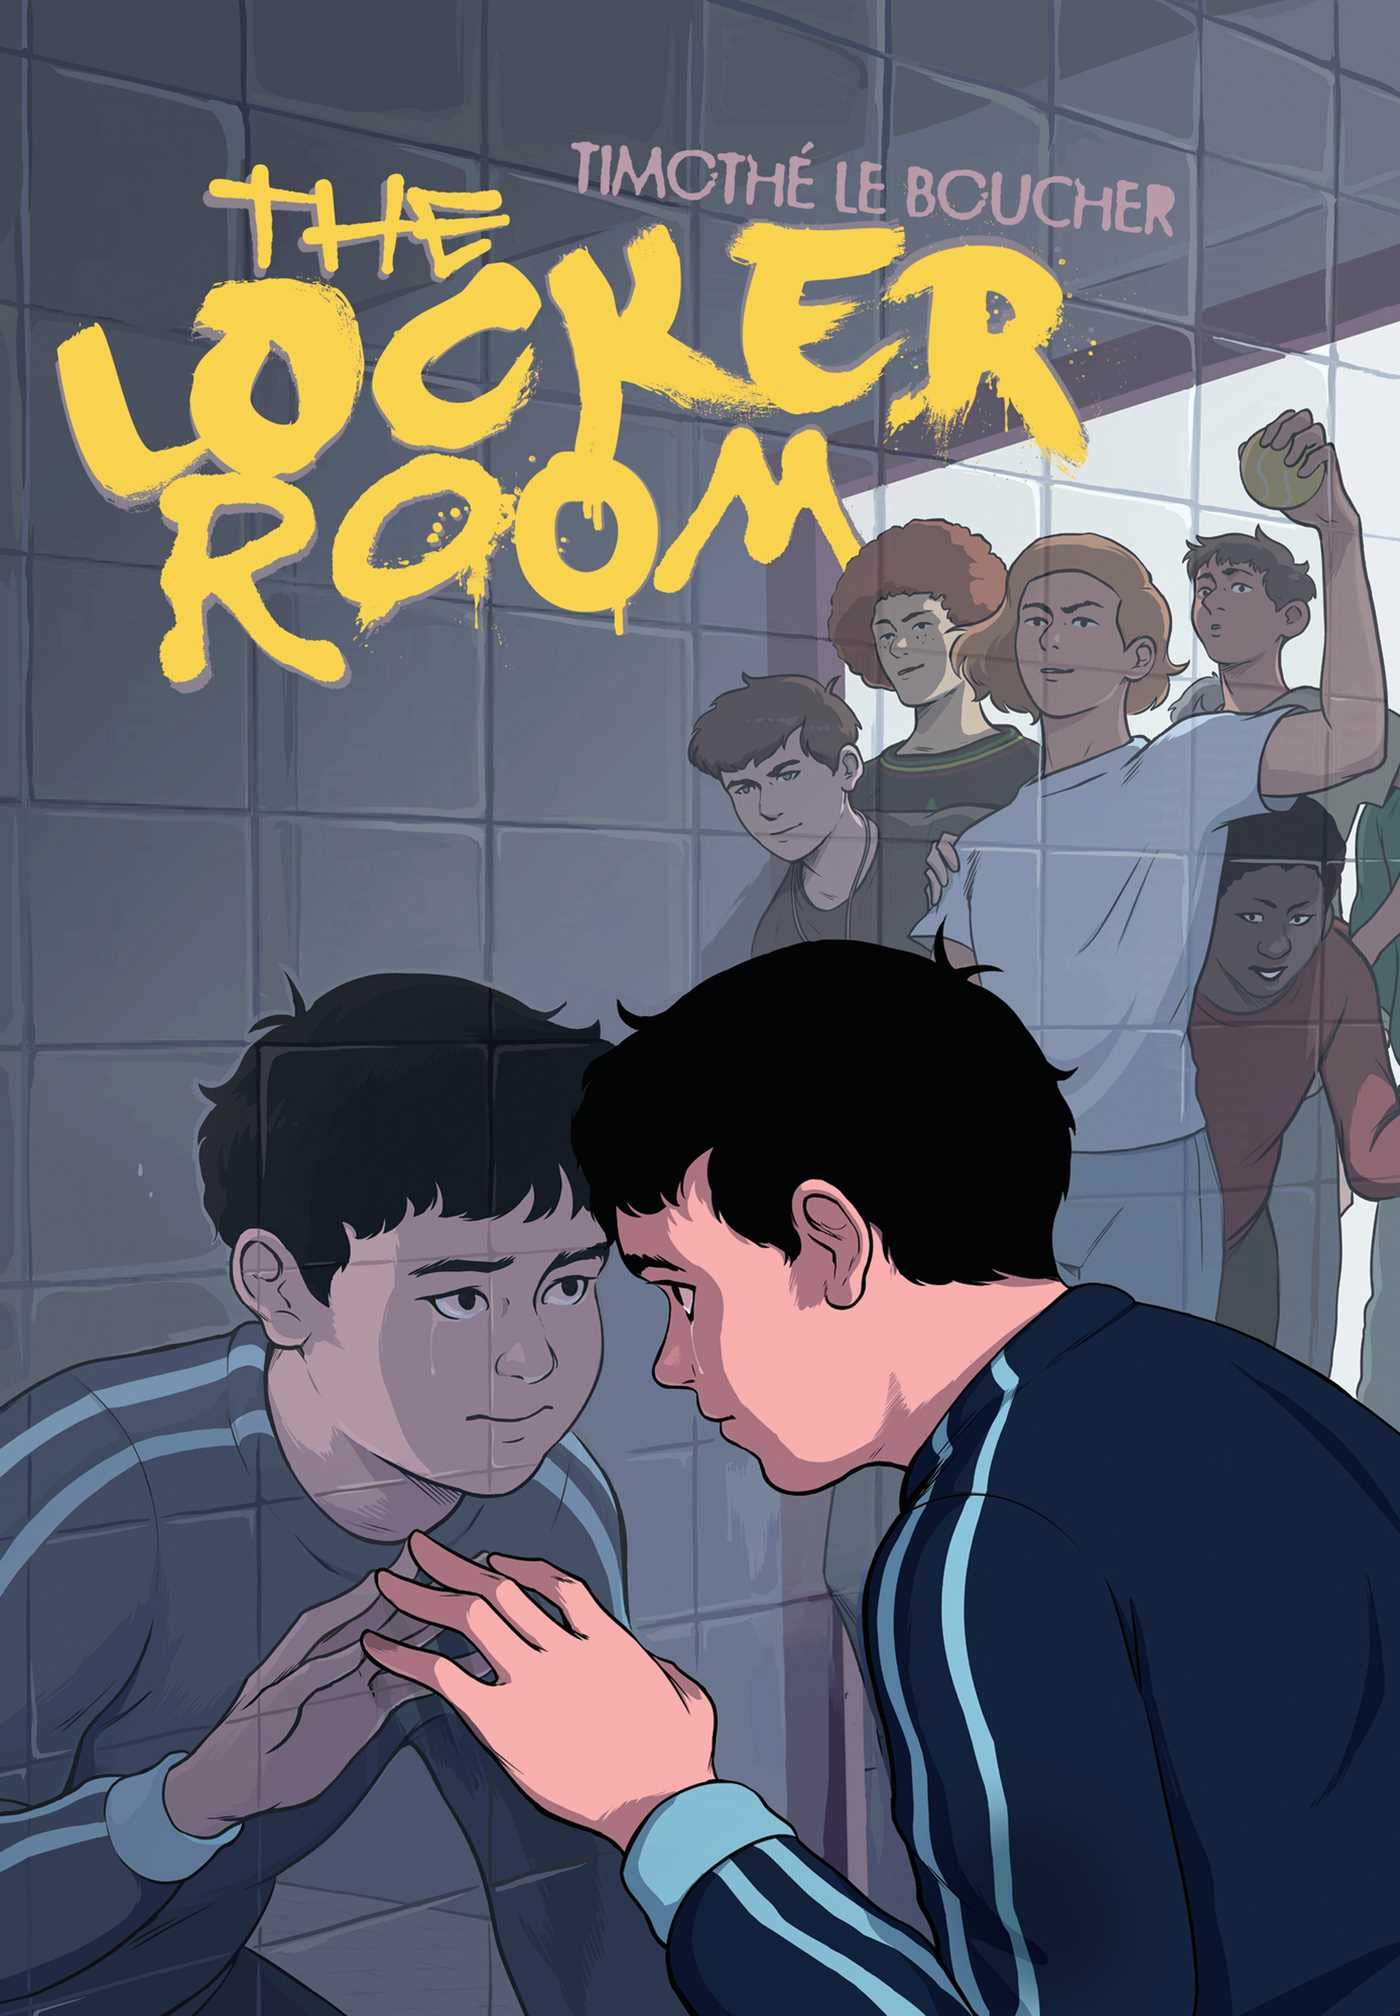 Locker Room Graphic Novel (Mature)